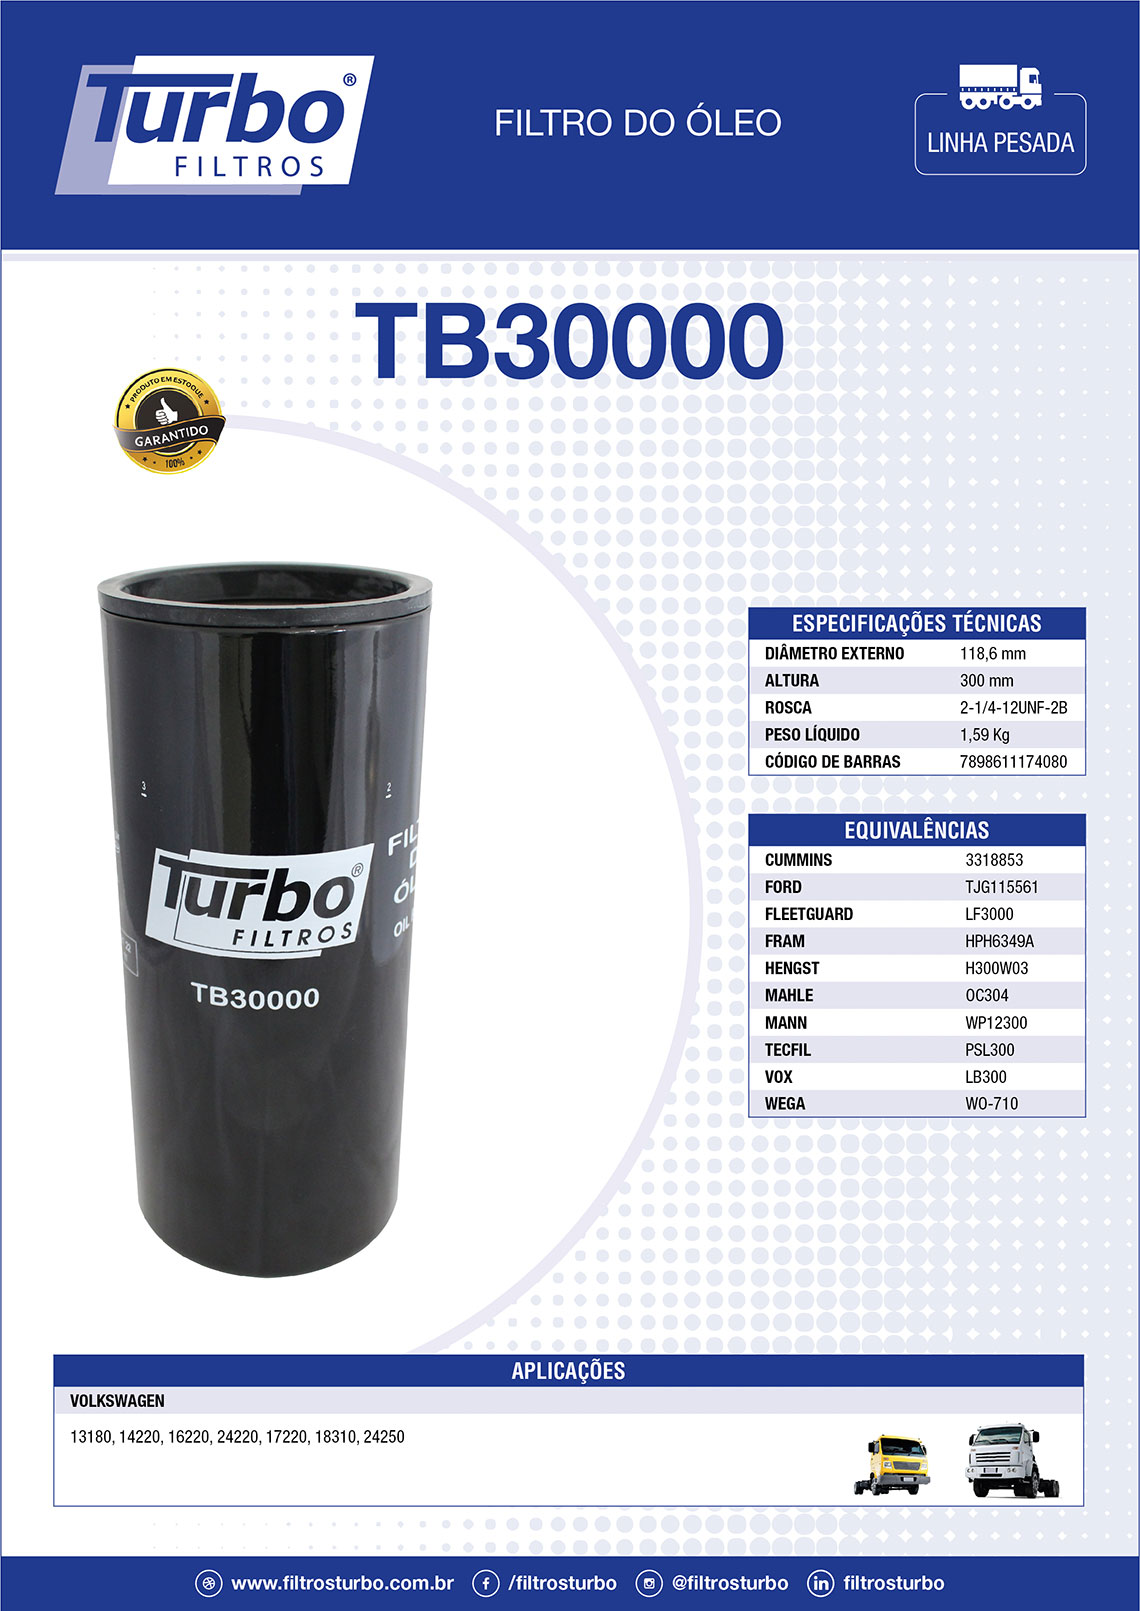 TB30000 - Filtros Turbo